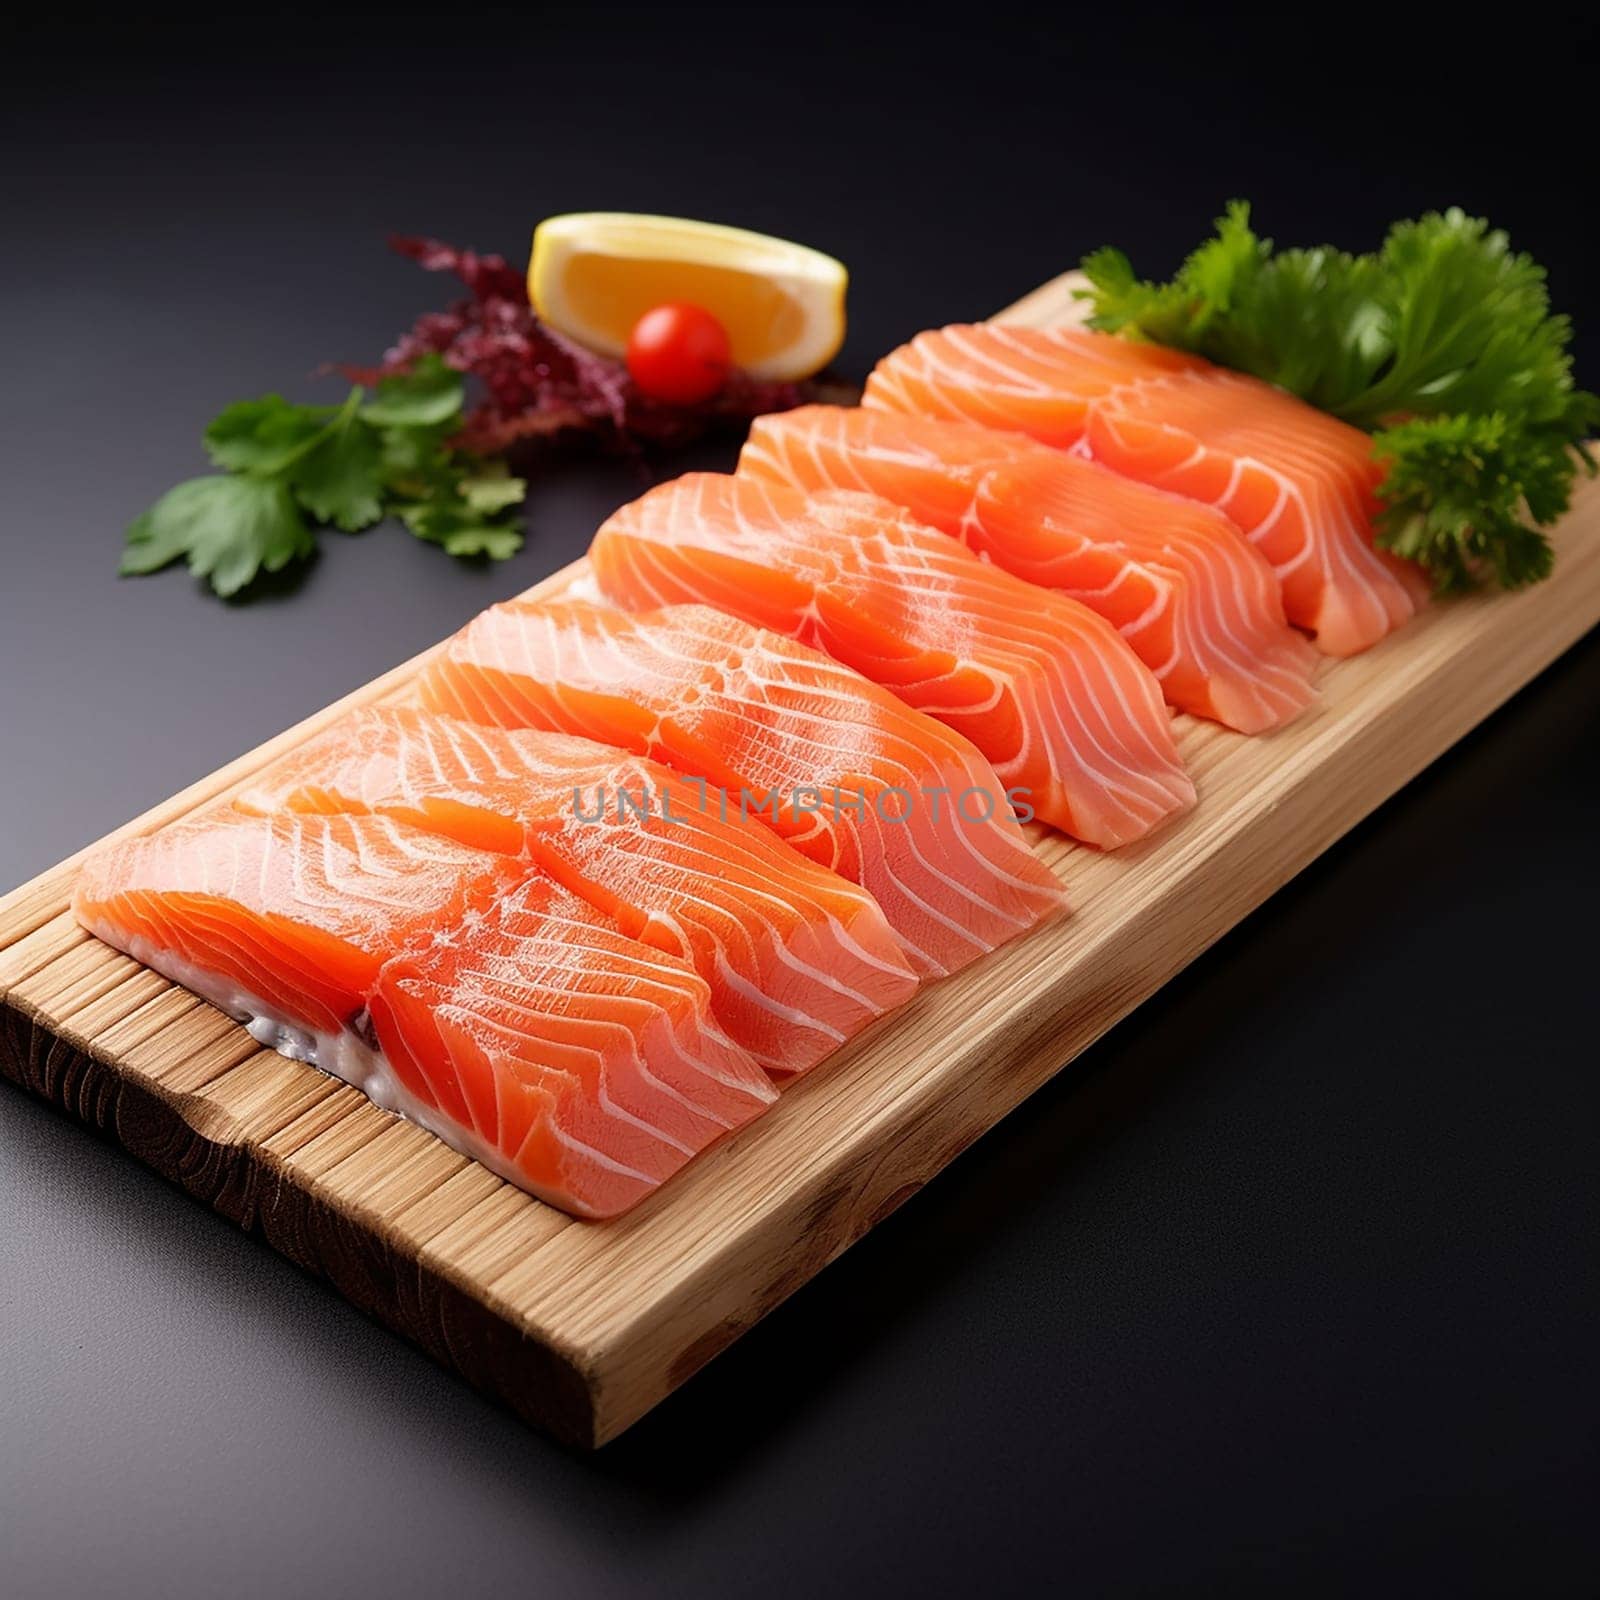 Fresh salmon sashimi slices on a wooden board with garnish.